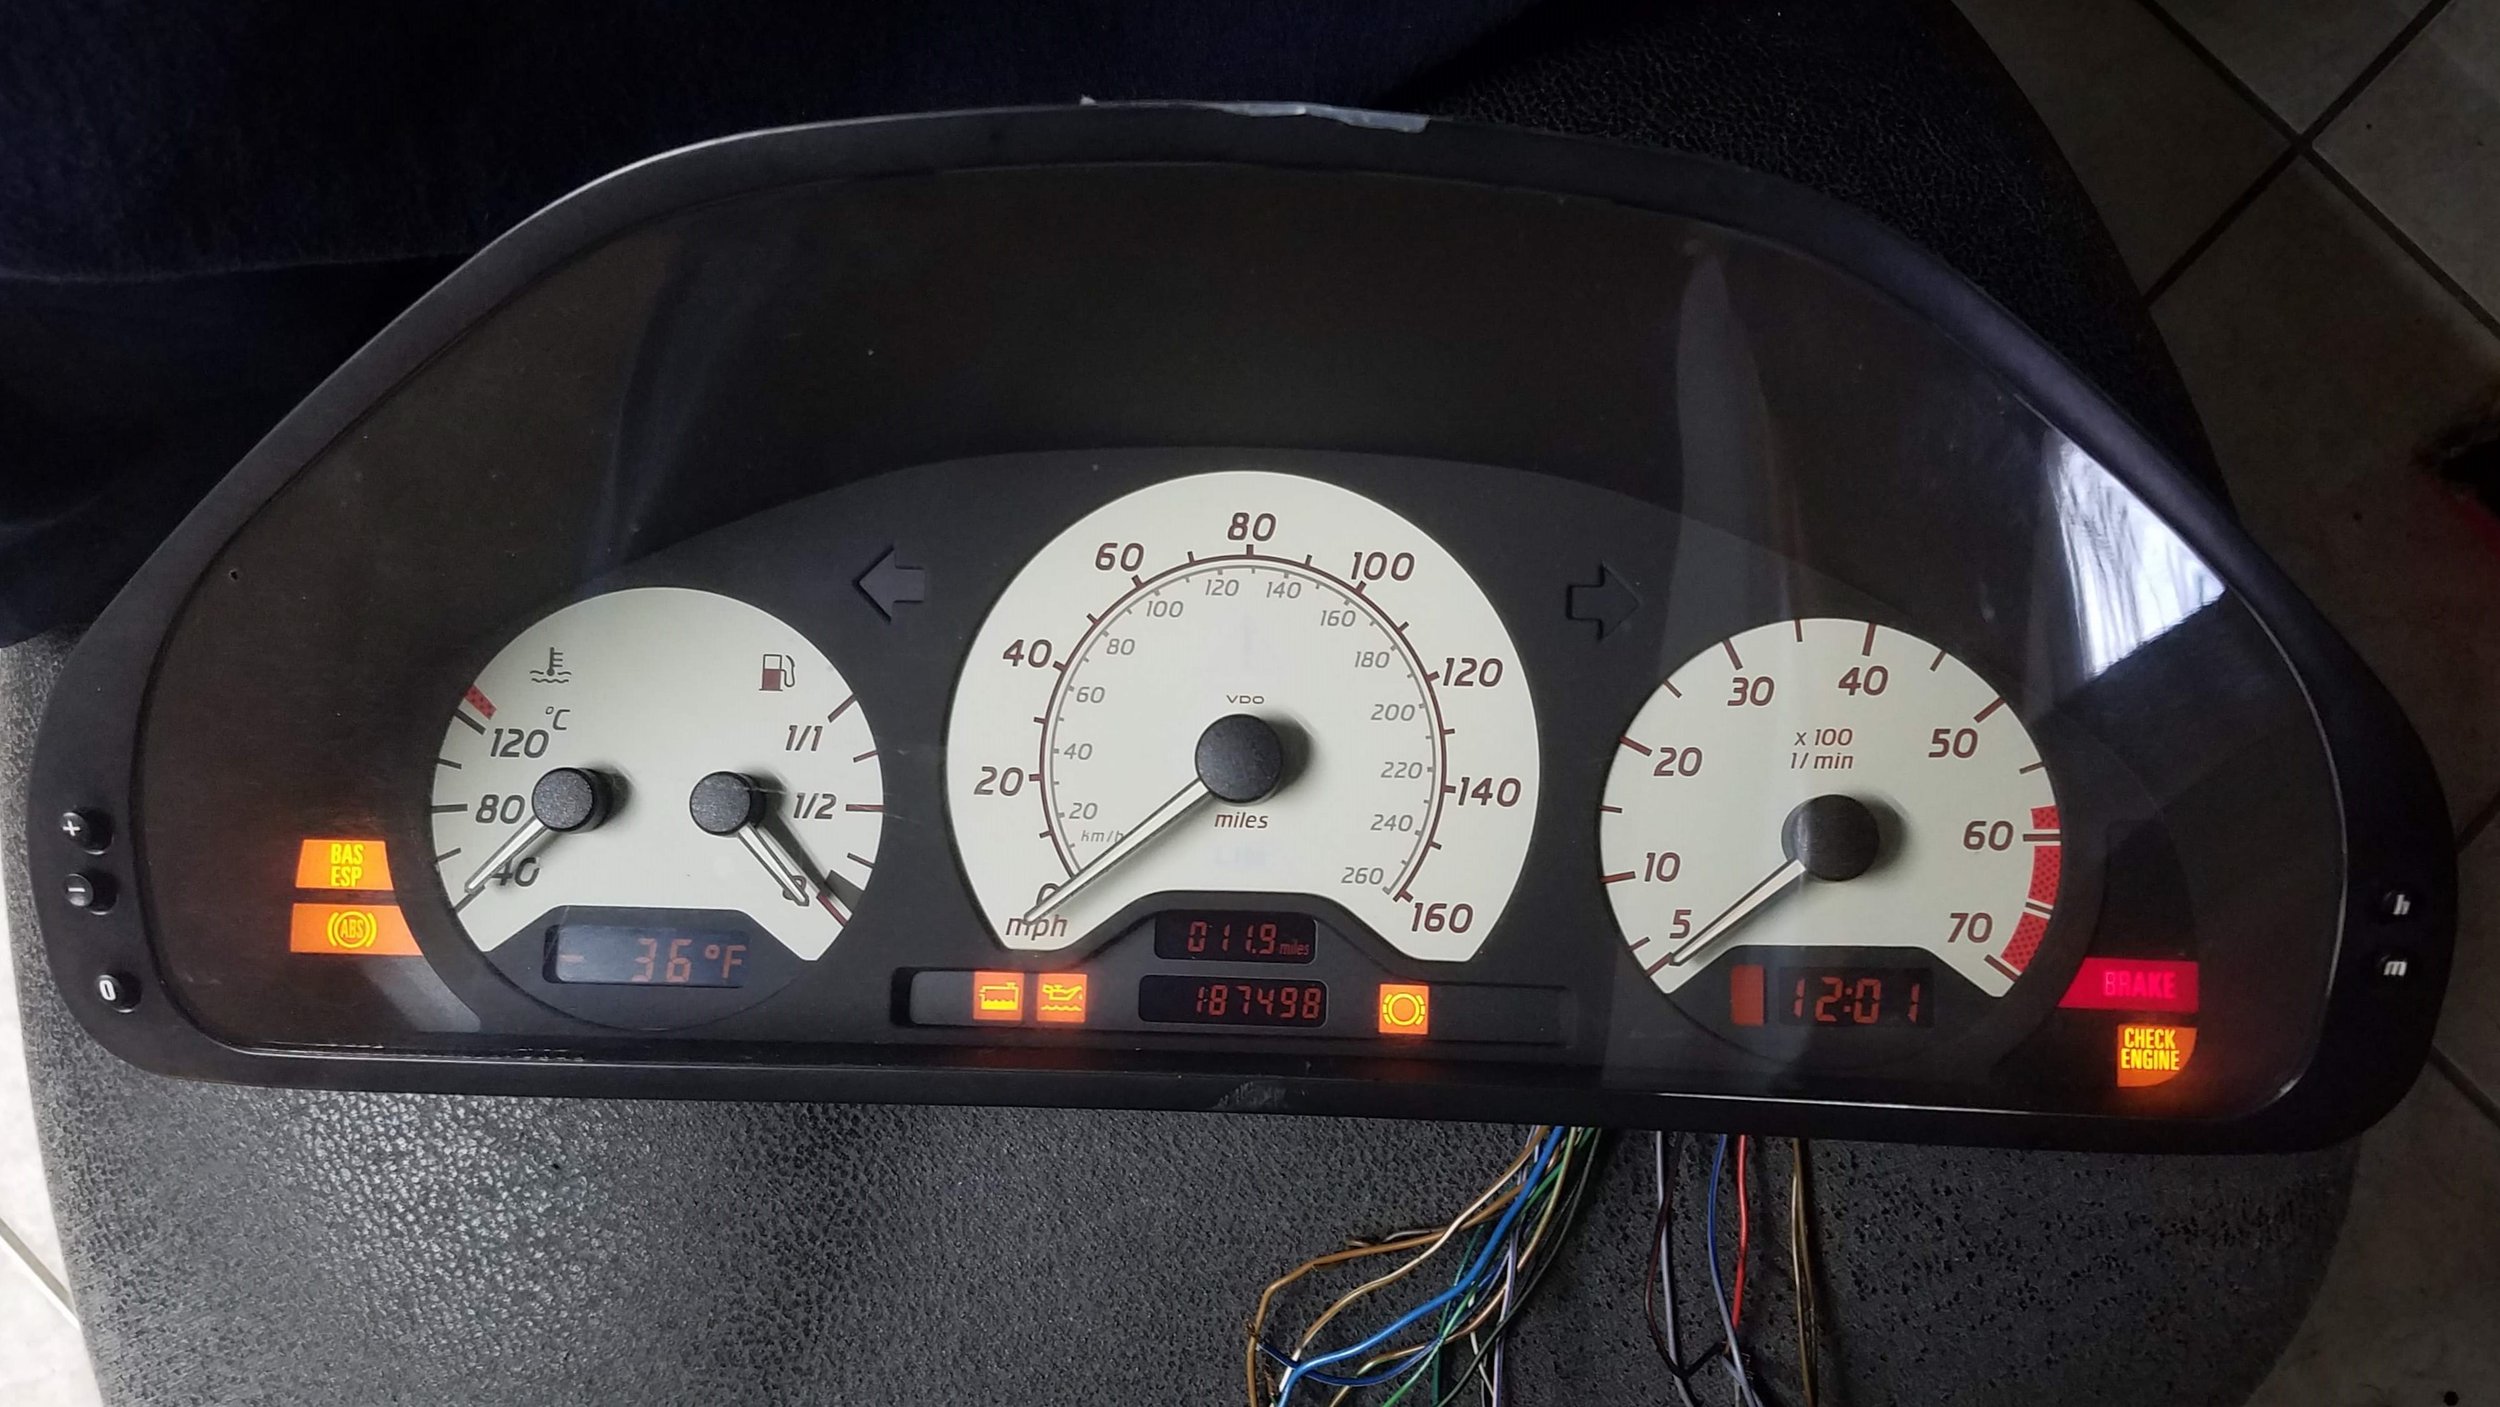 Mercedes CLK W208 speedo lights on speedometer repair